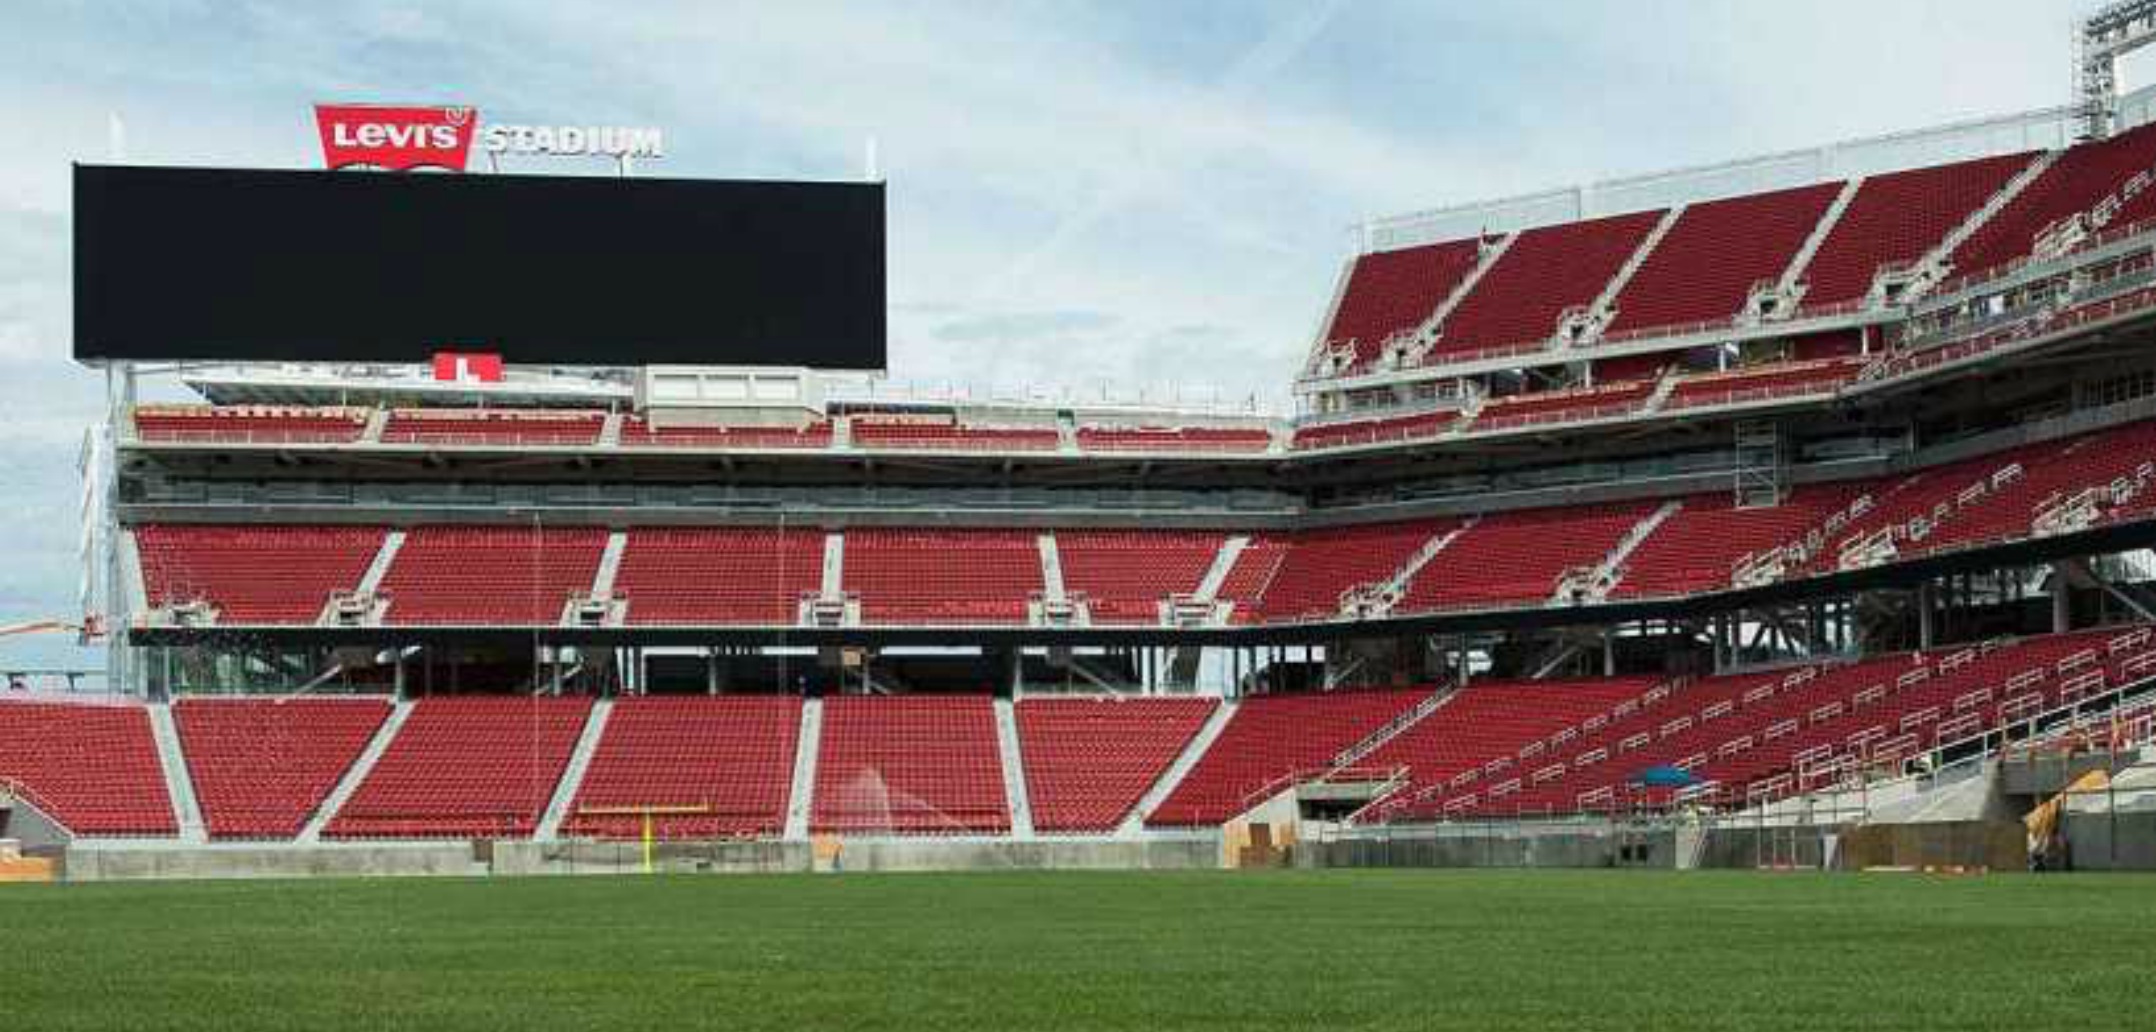 Report: 49ers Earn $ Billion in Revenue From Levi's Stadium